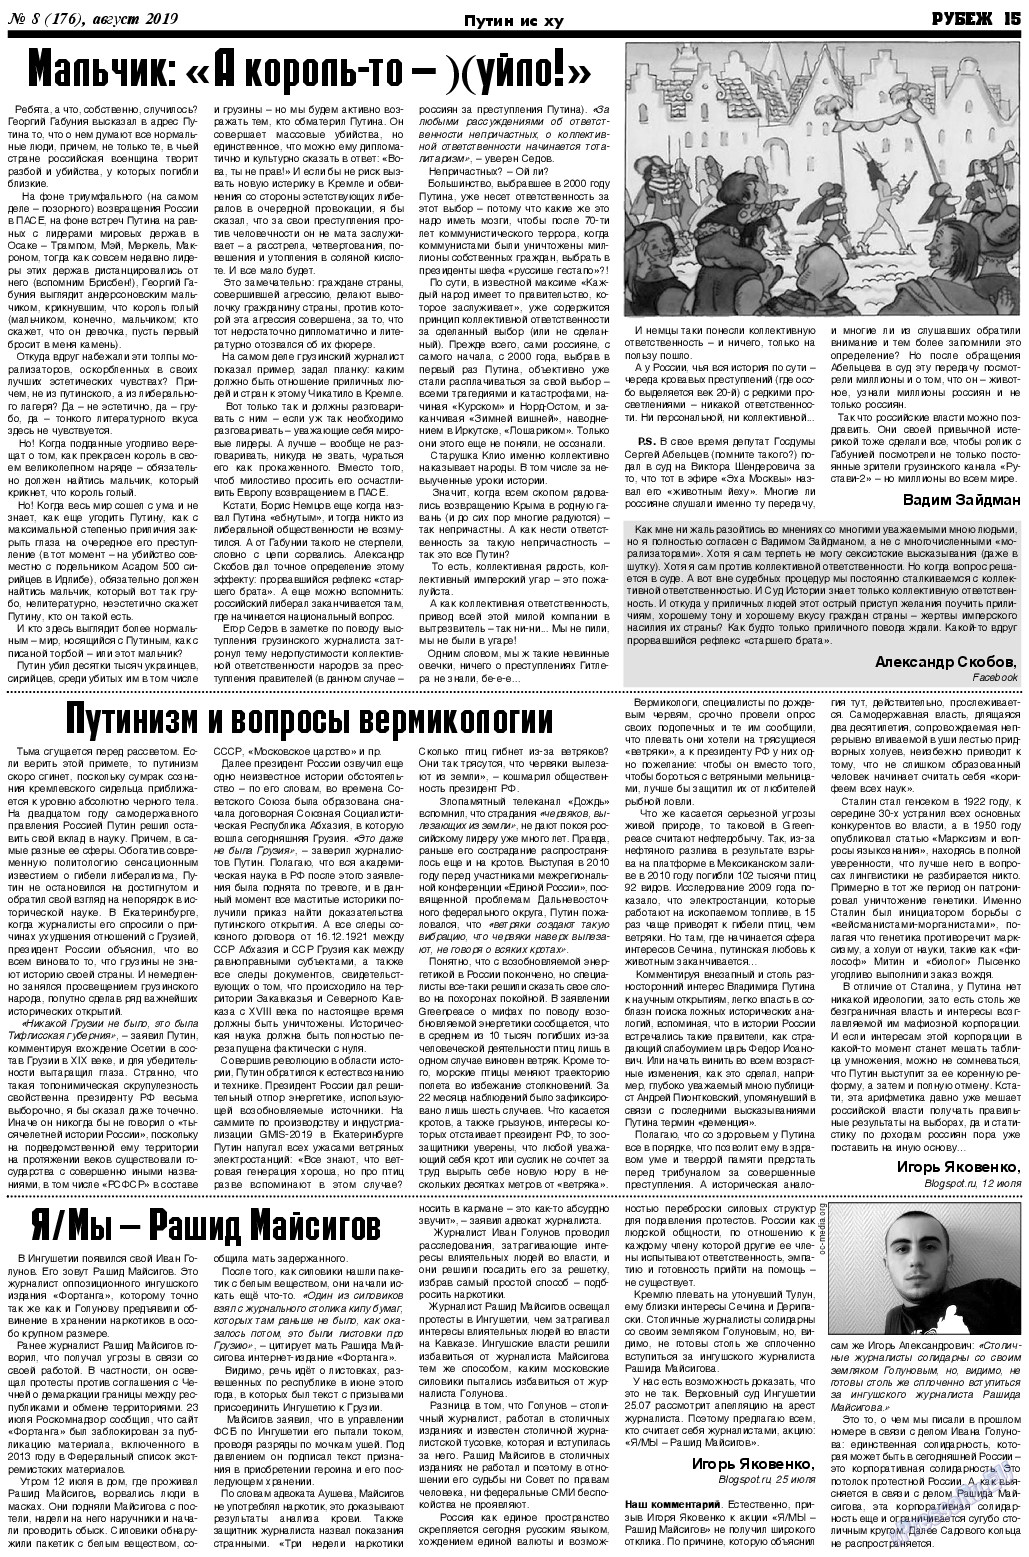 Рубеж, газета. 2019 №8 стр.15